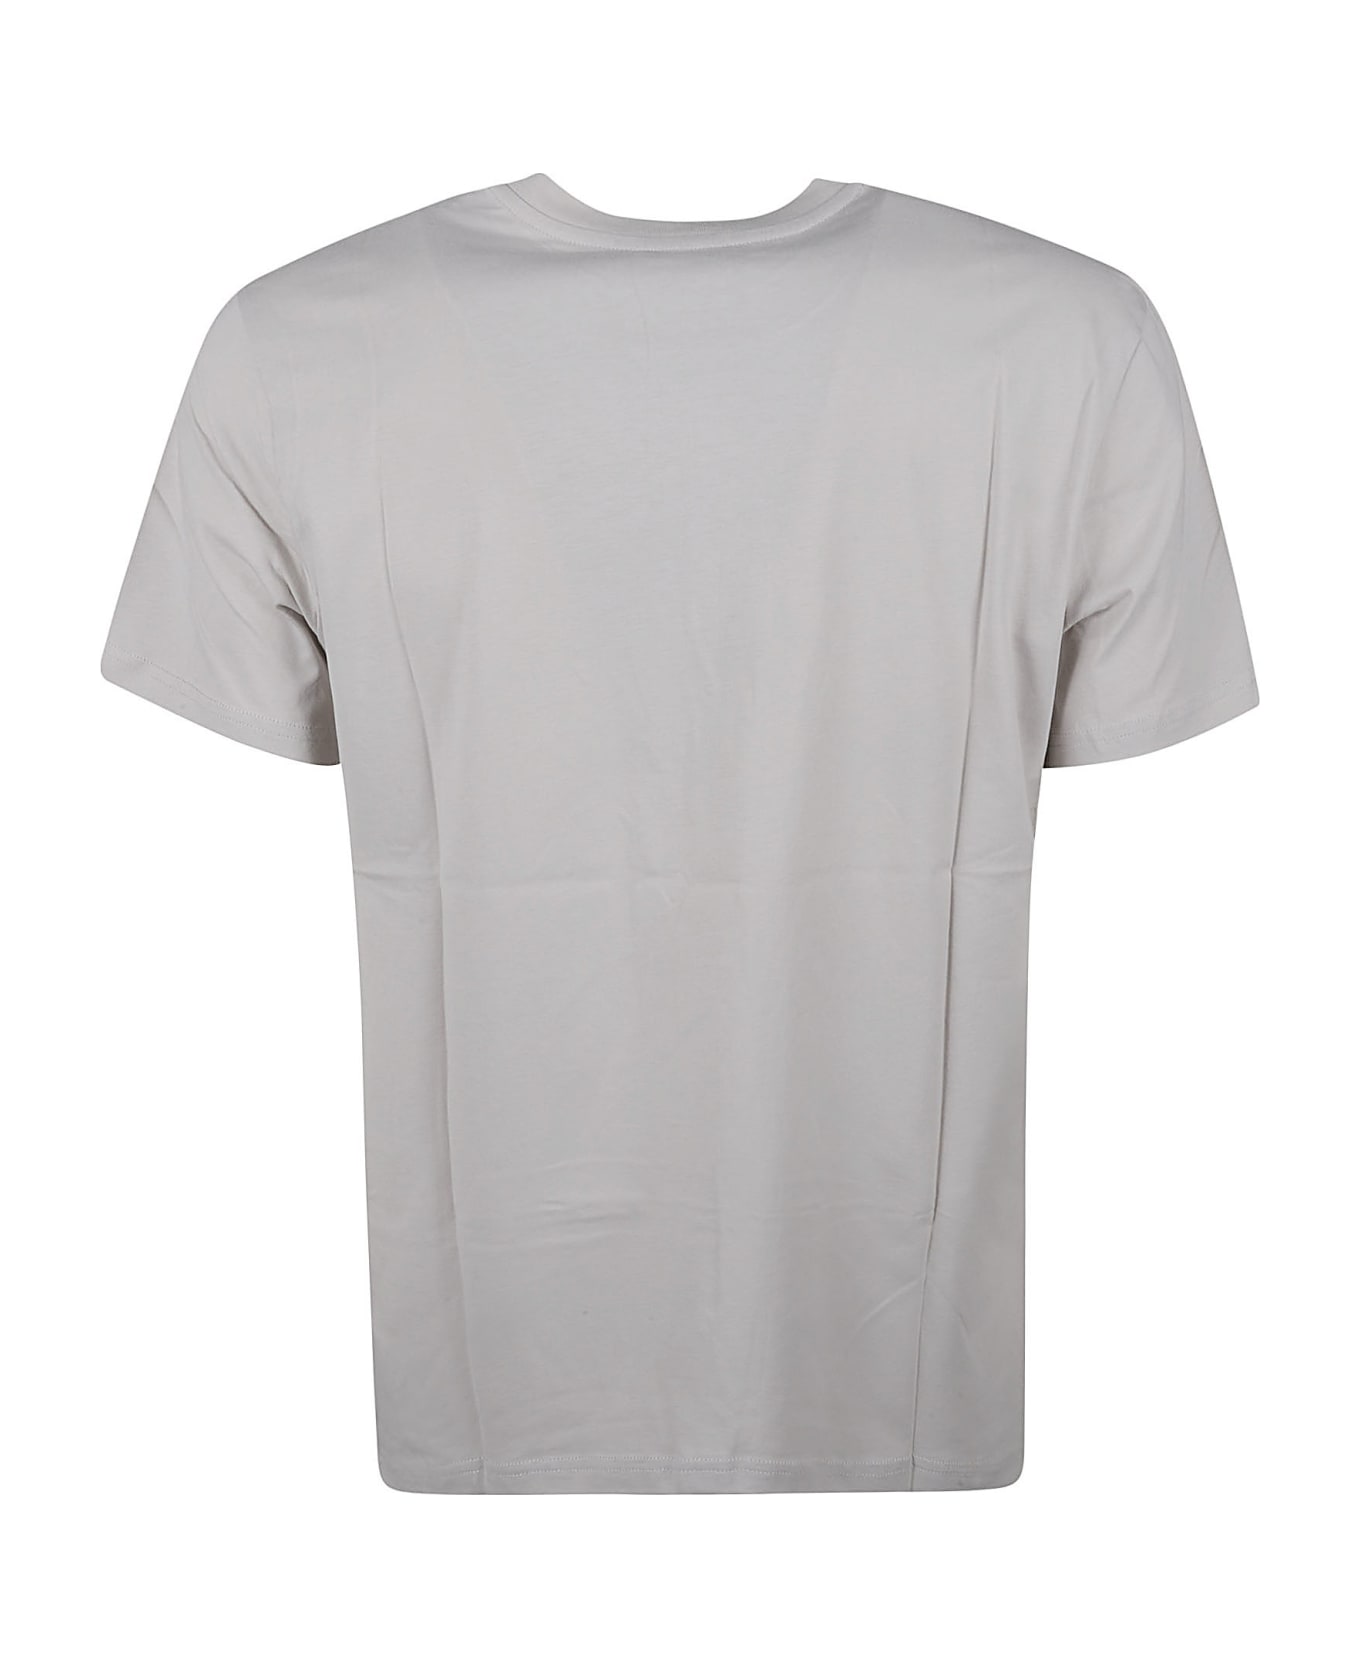 Moschino Logo Print T-shirt - Grey シャツ